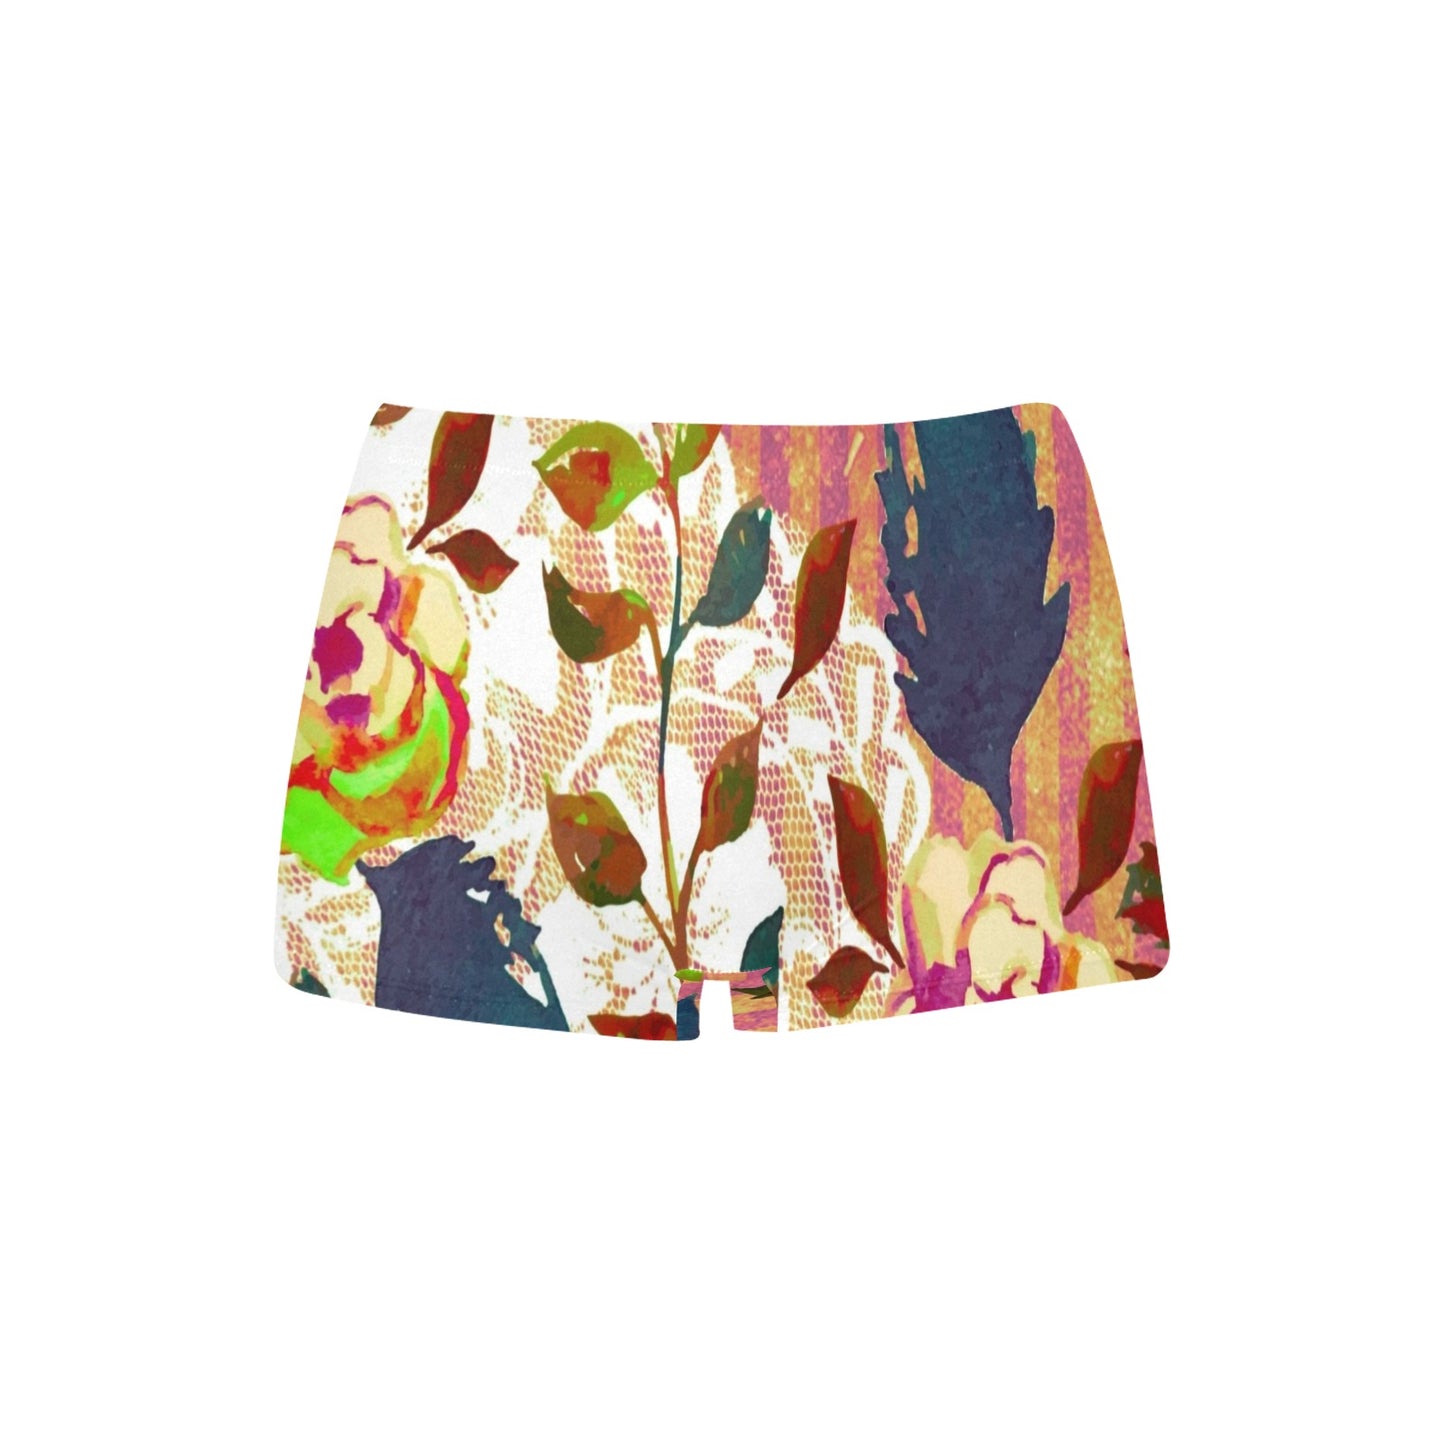 Printed Lace Boyshorts, daisy dukes, pum pum shorts, shortie shorts , design 22